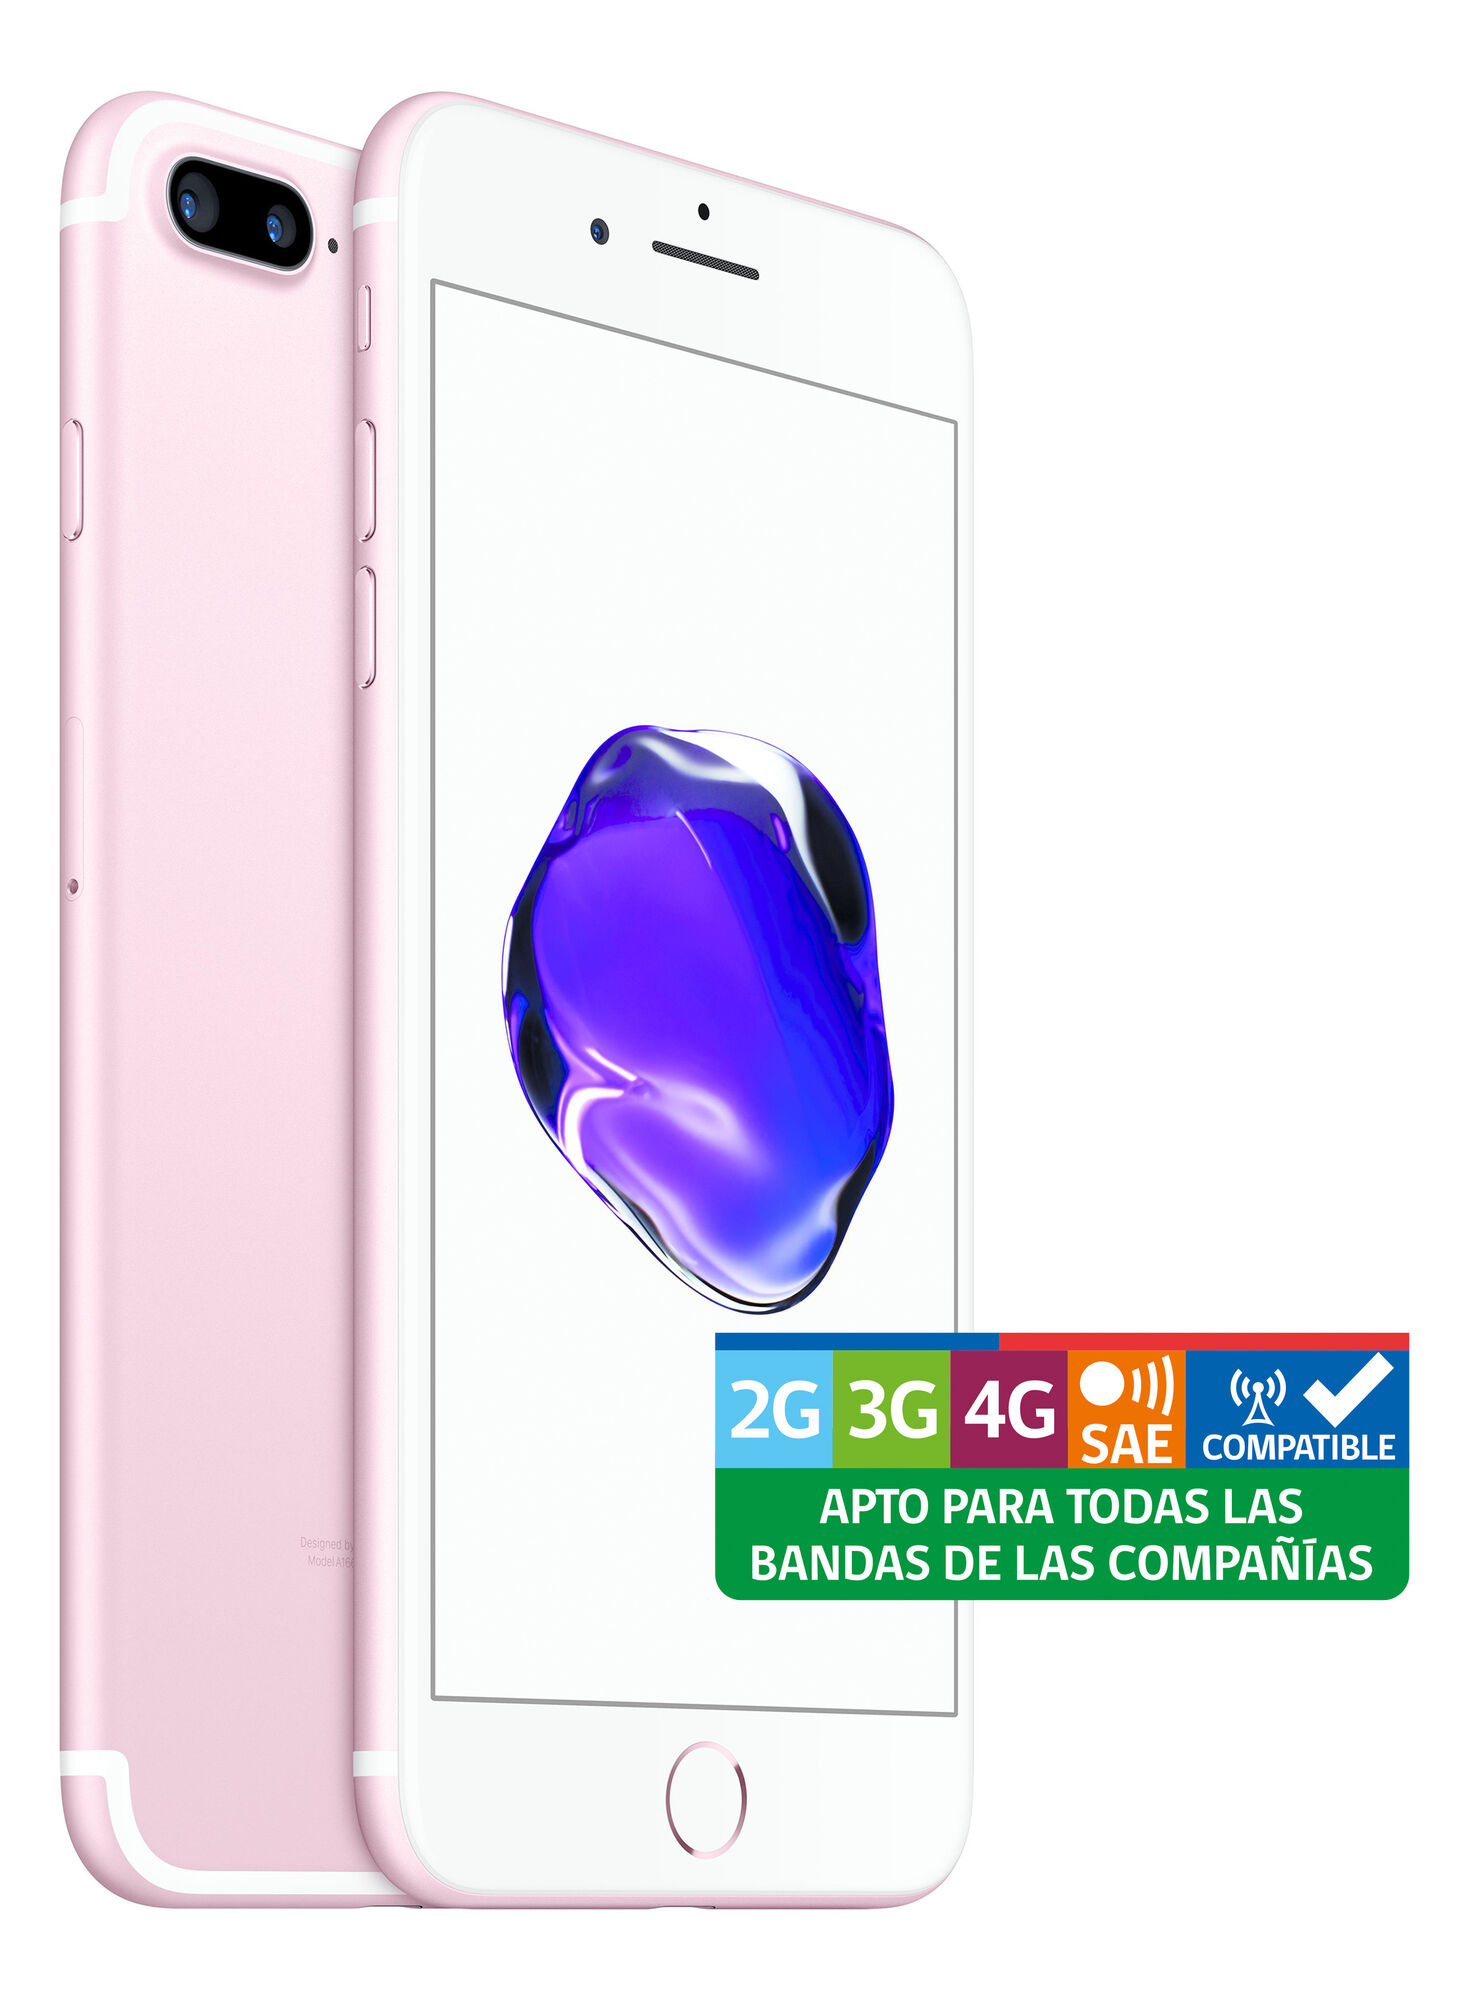 engañar Secretar reposo iPhone 7Plus 32GB Rosado Gold 5.5" Liberado - Smartphones | Paris.cl